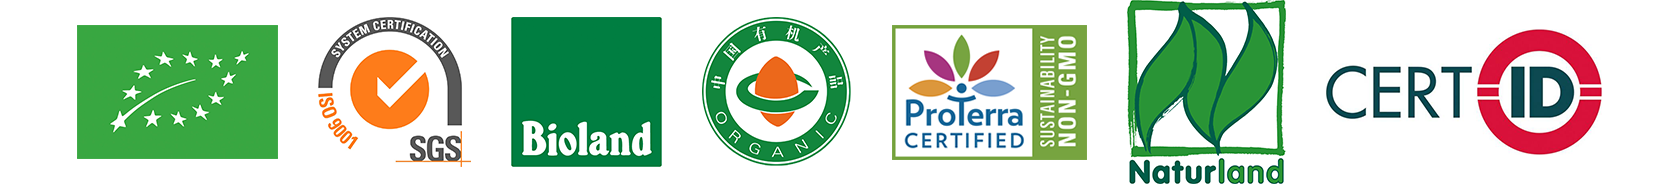 Labels of Agribio Union, organic sunflower producer